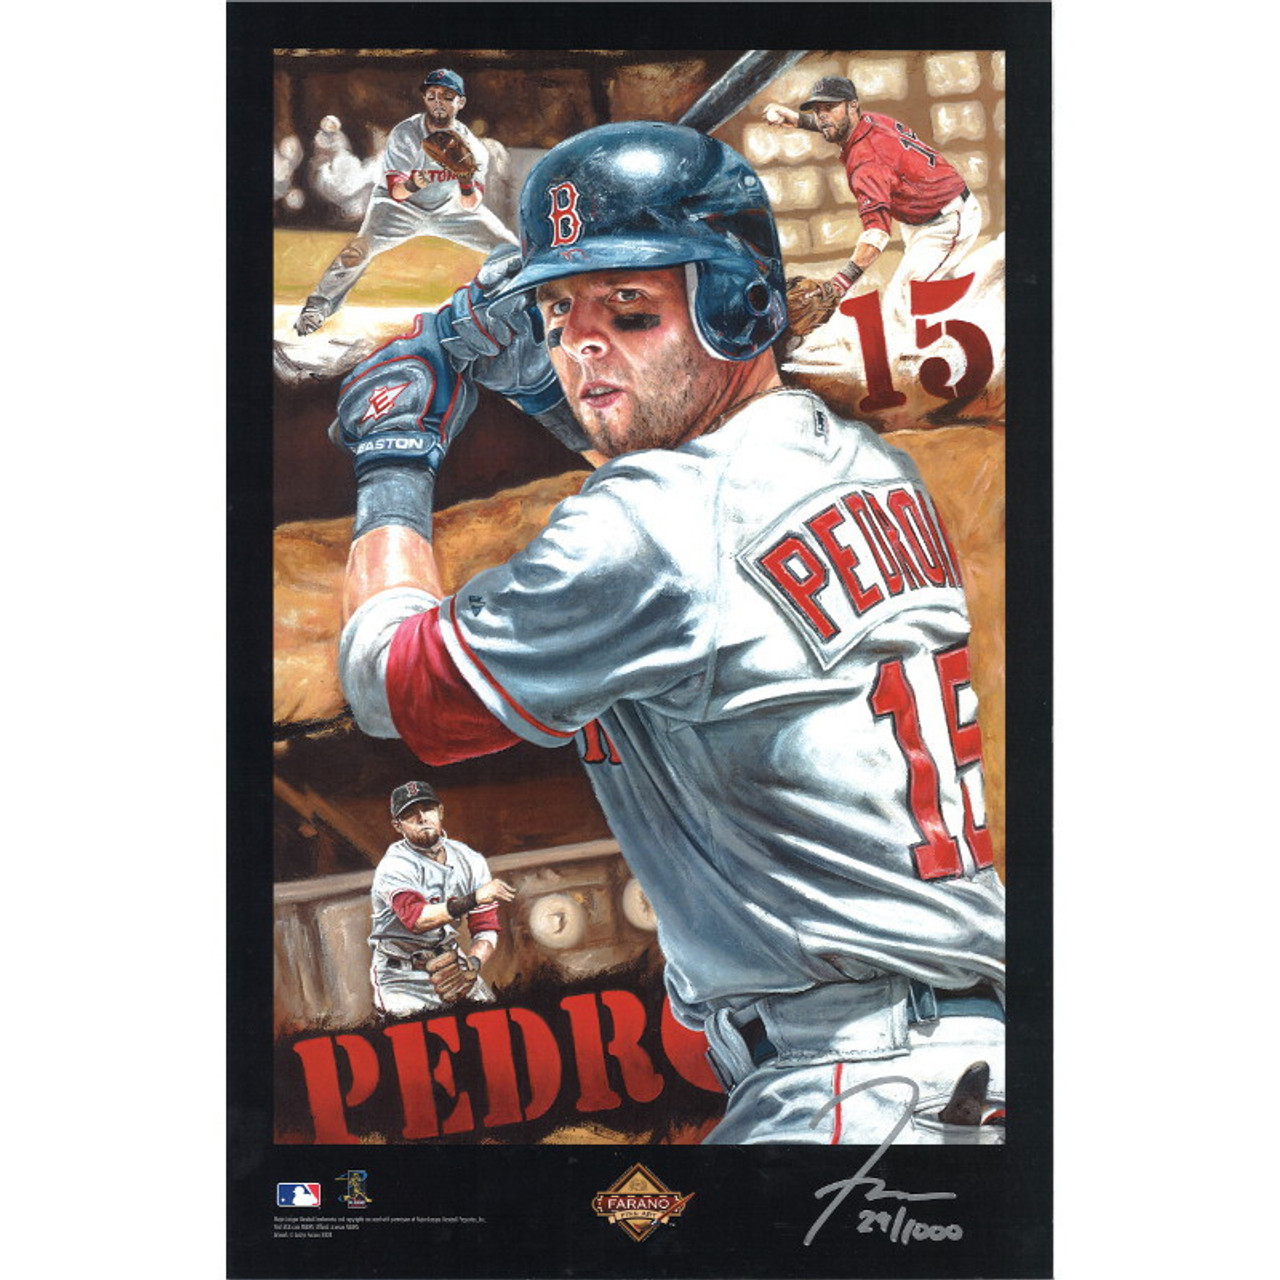 Dustin Pedroia baseball card (Boston Red Sox World Series Champion